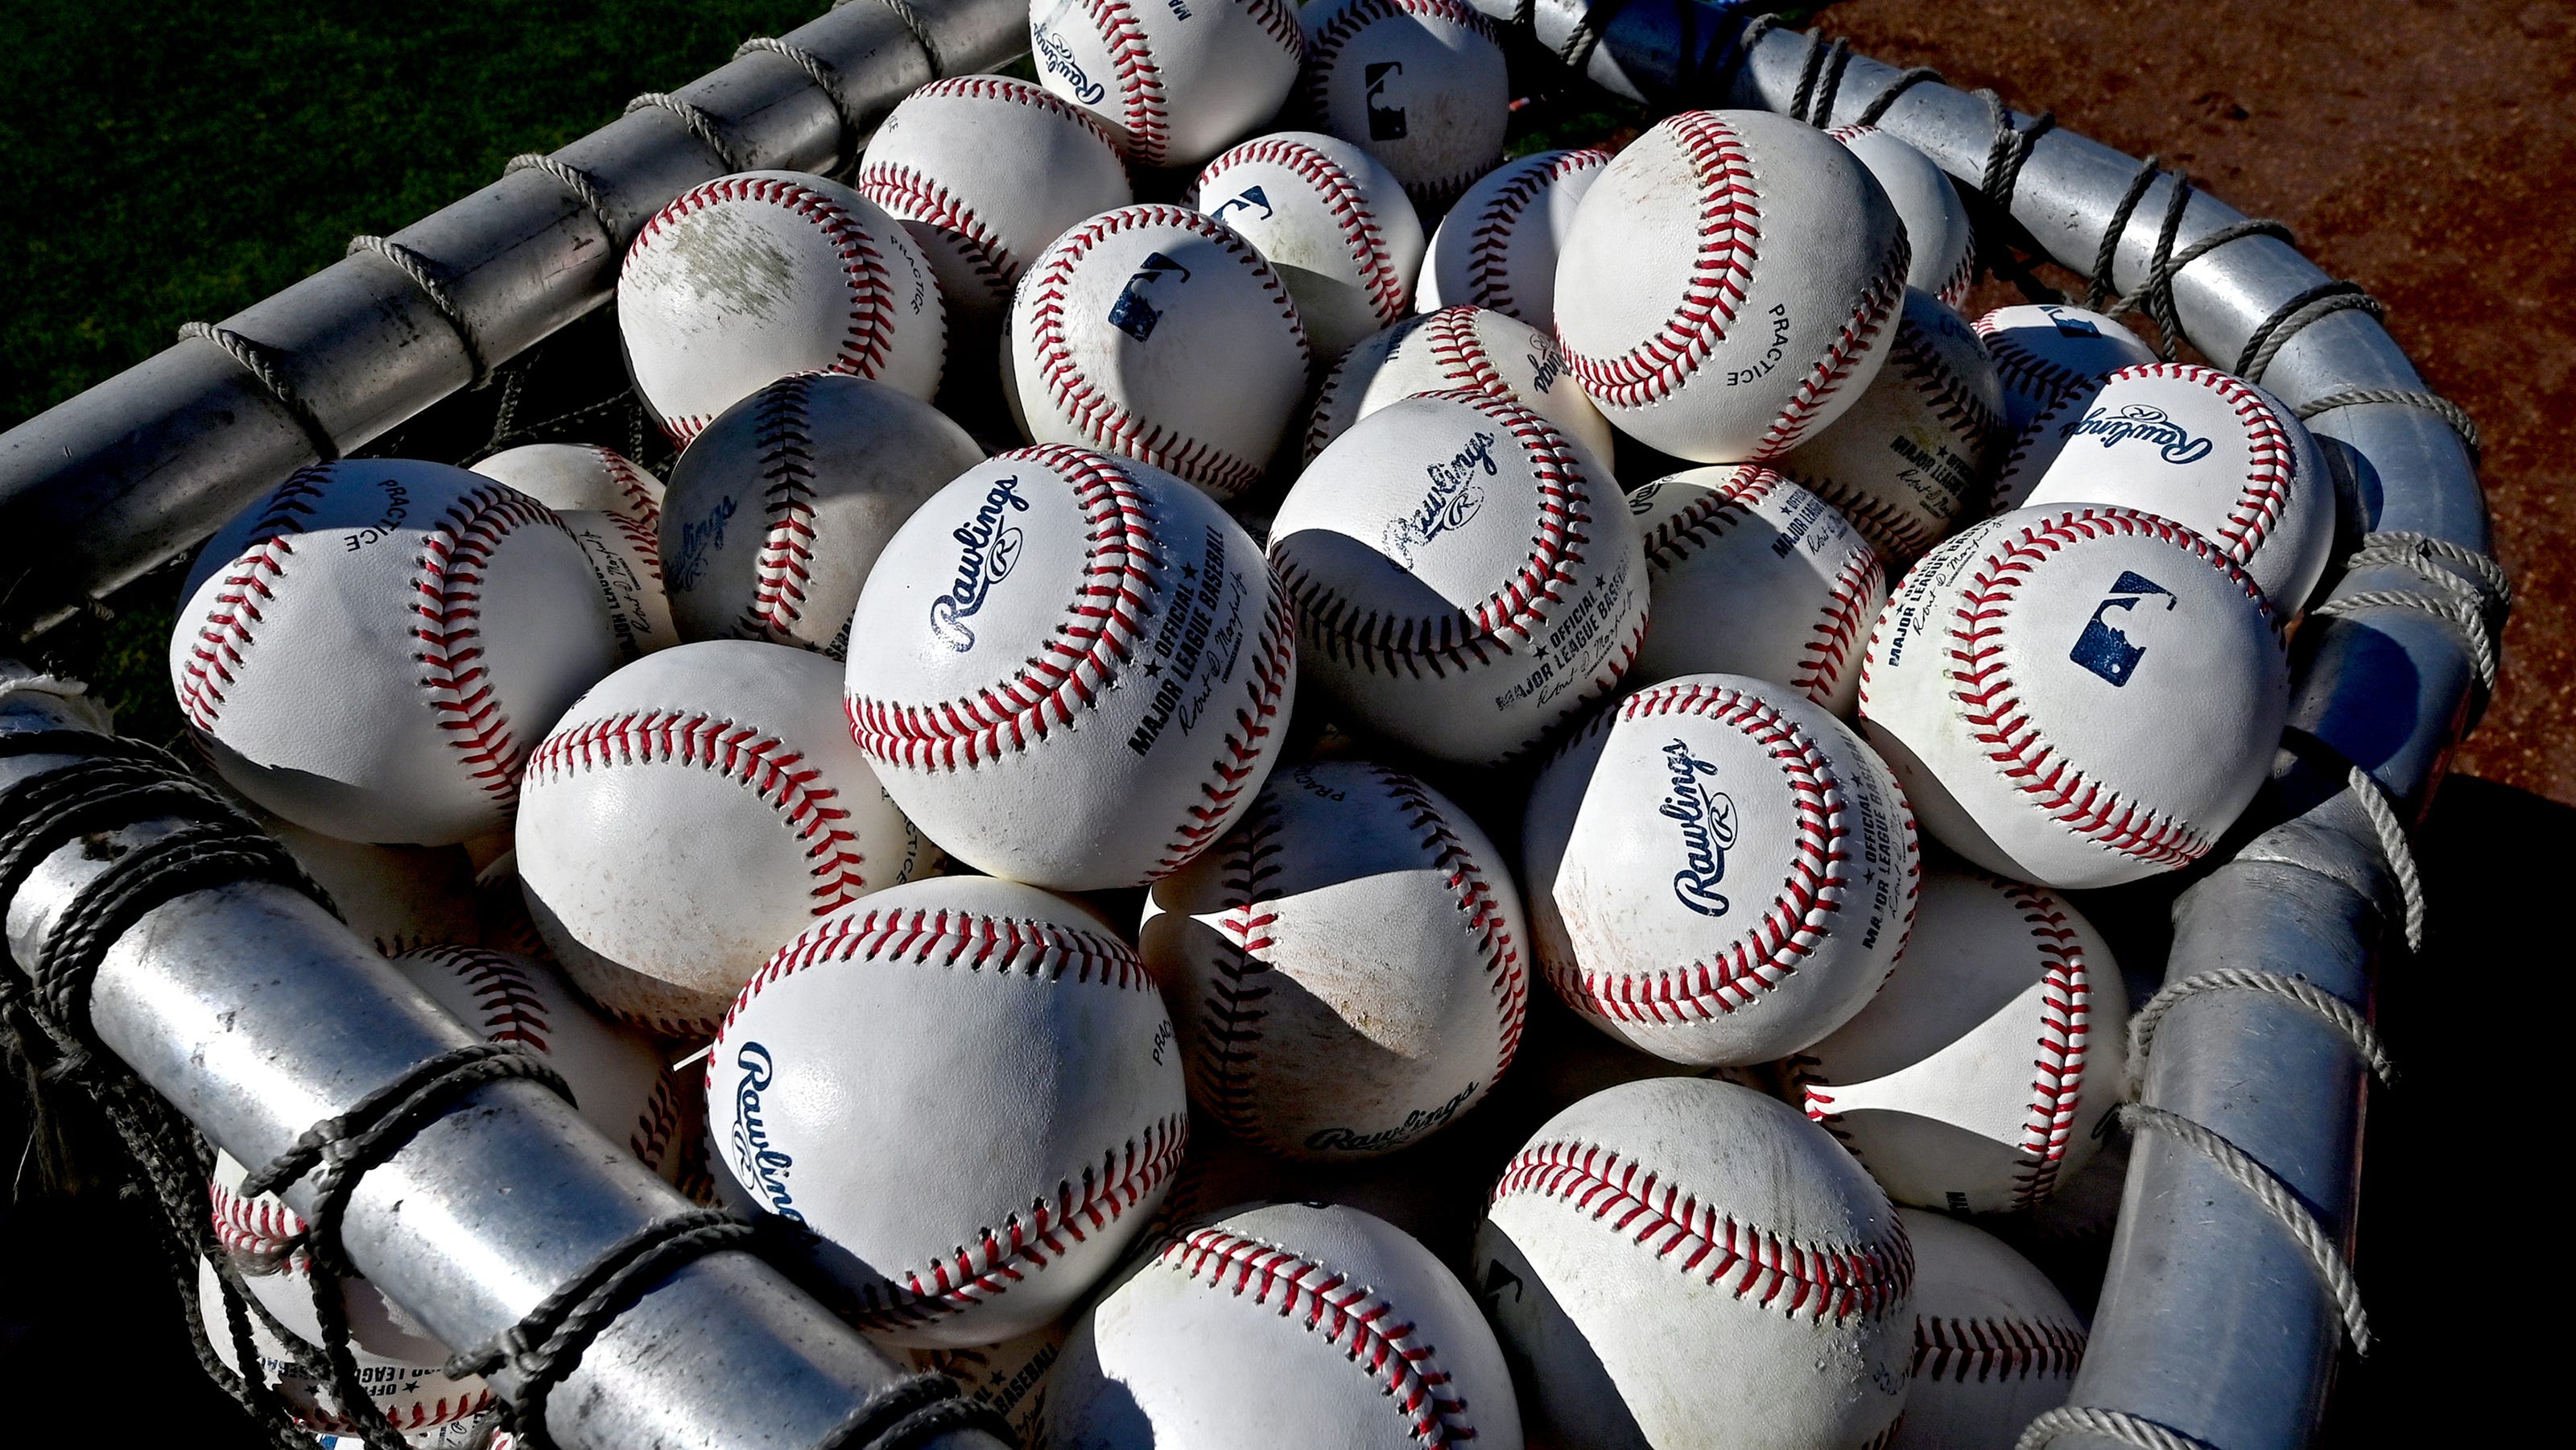 California Winter League baseball returns following twoyear absence